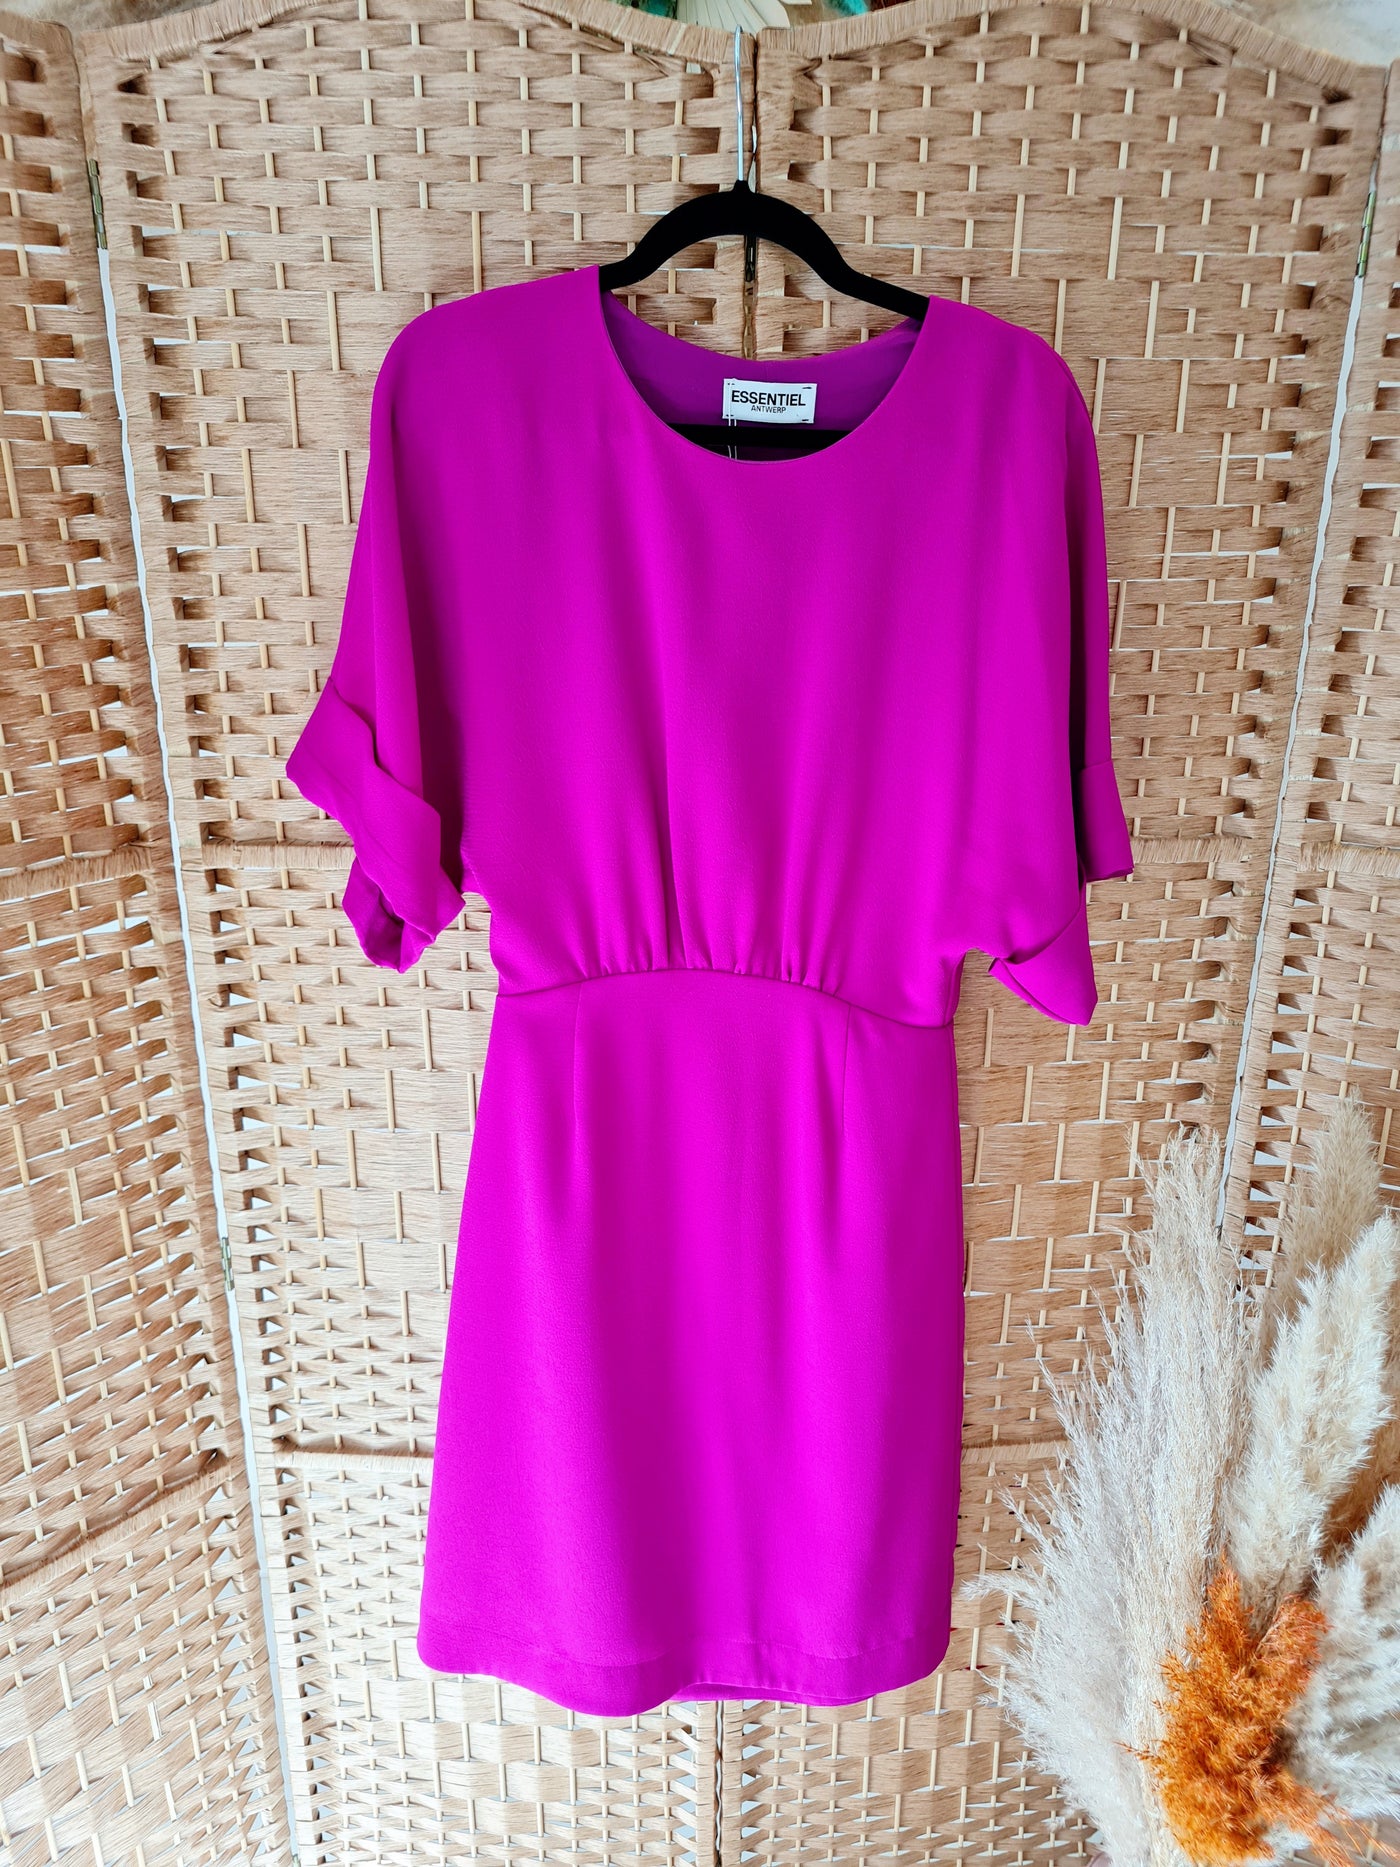 Essentiel Antwerp Purple Dress 6/8